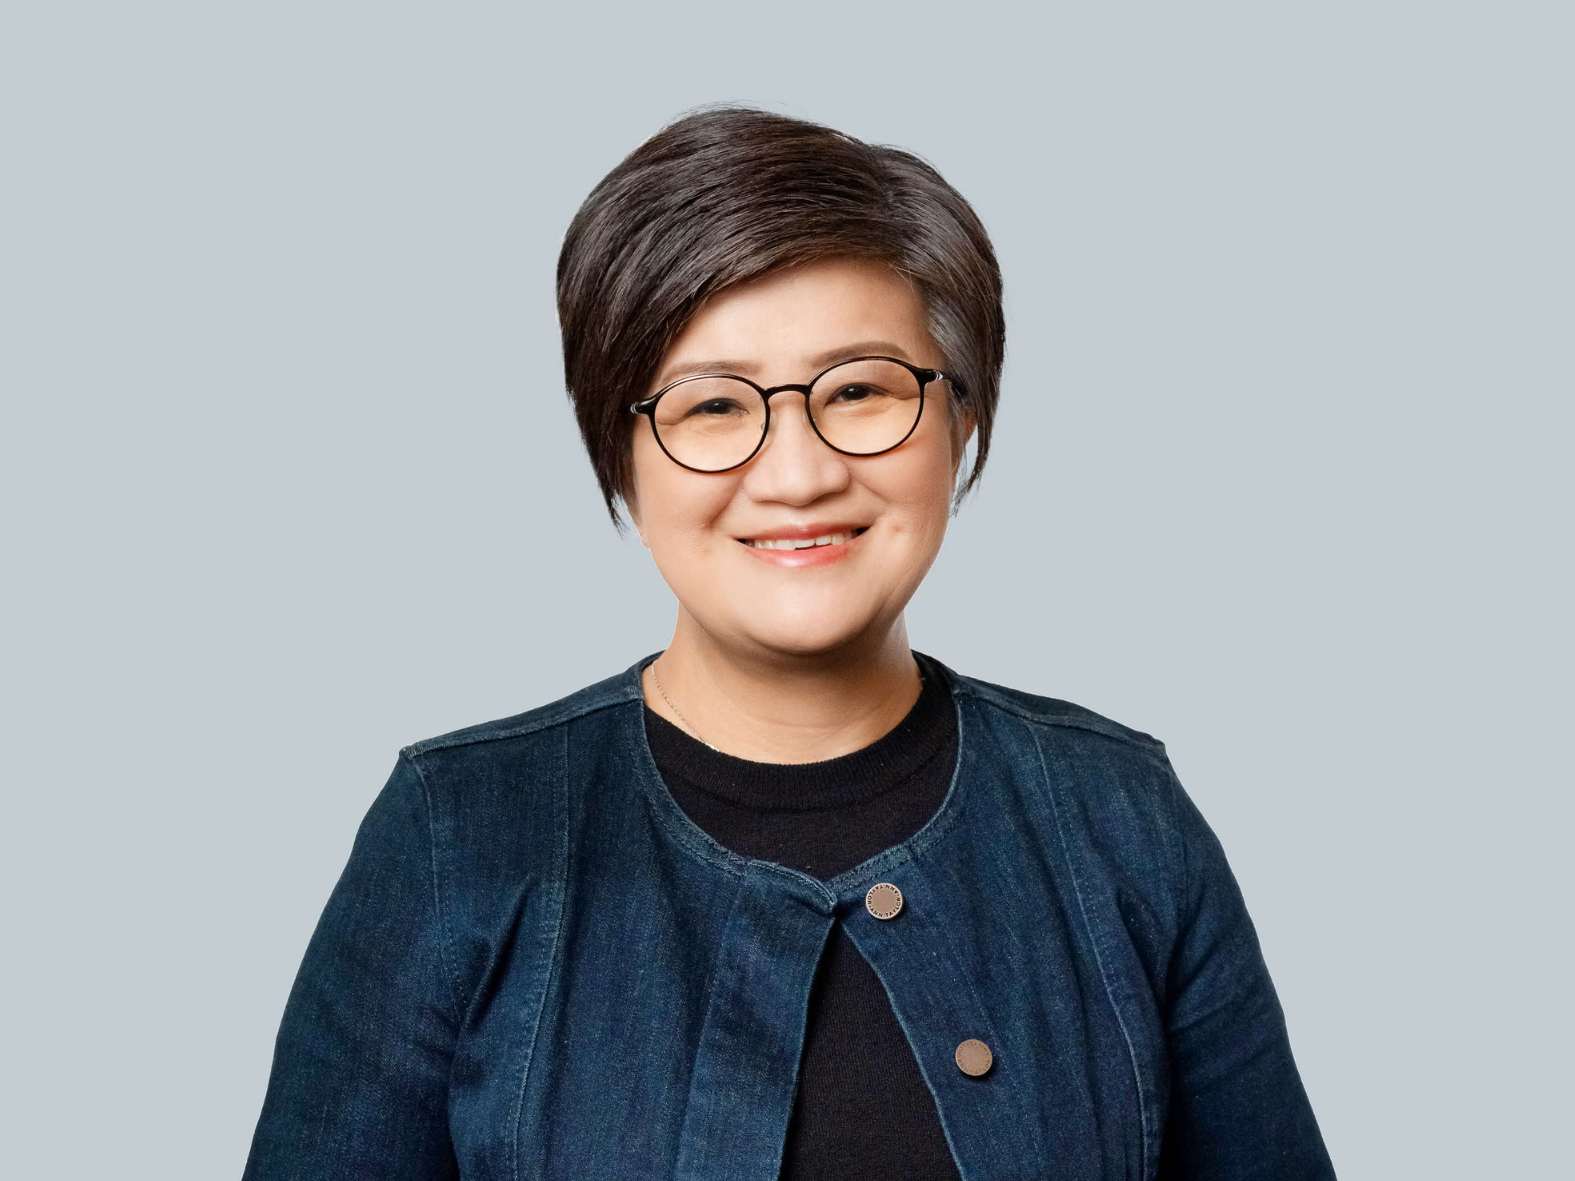 Ms Goh Geok Cheng